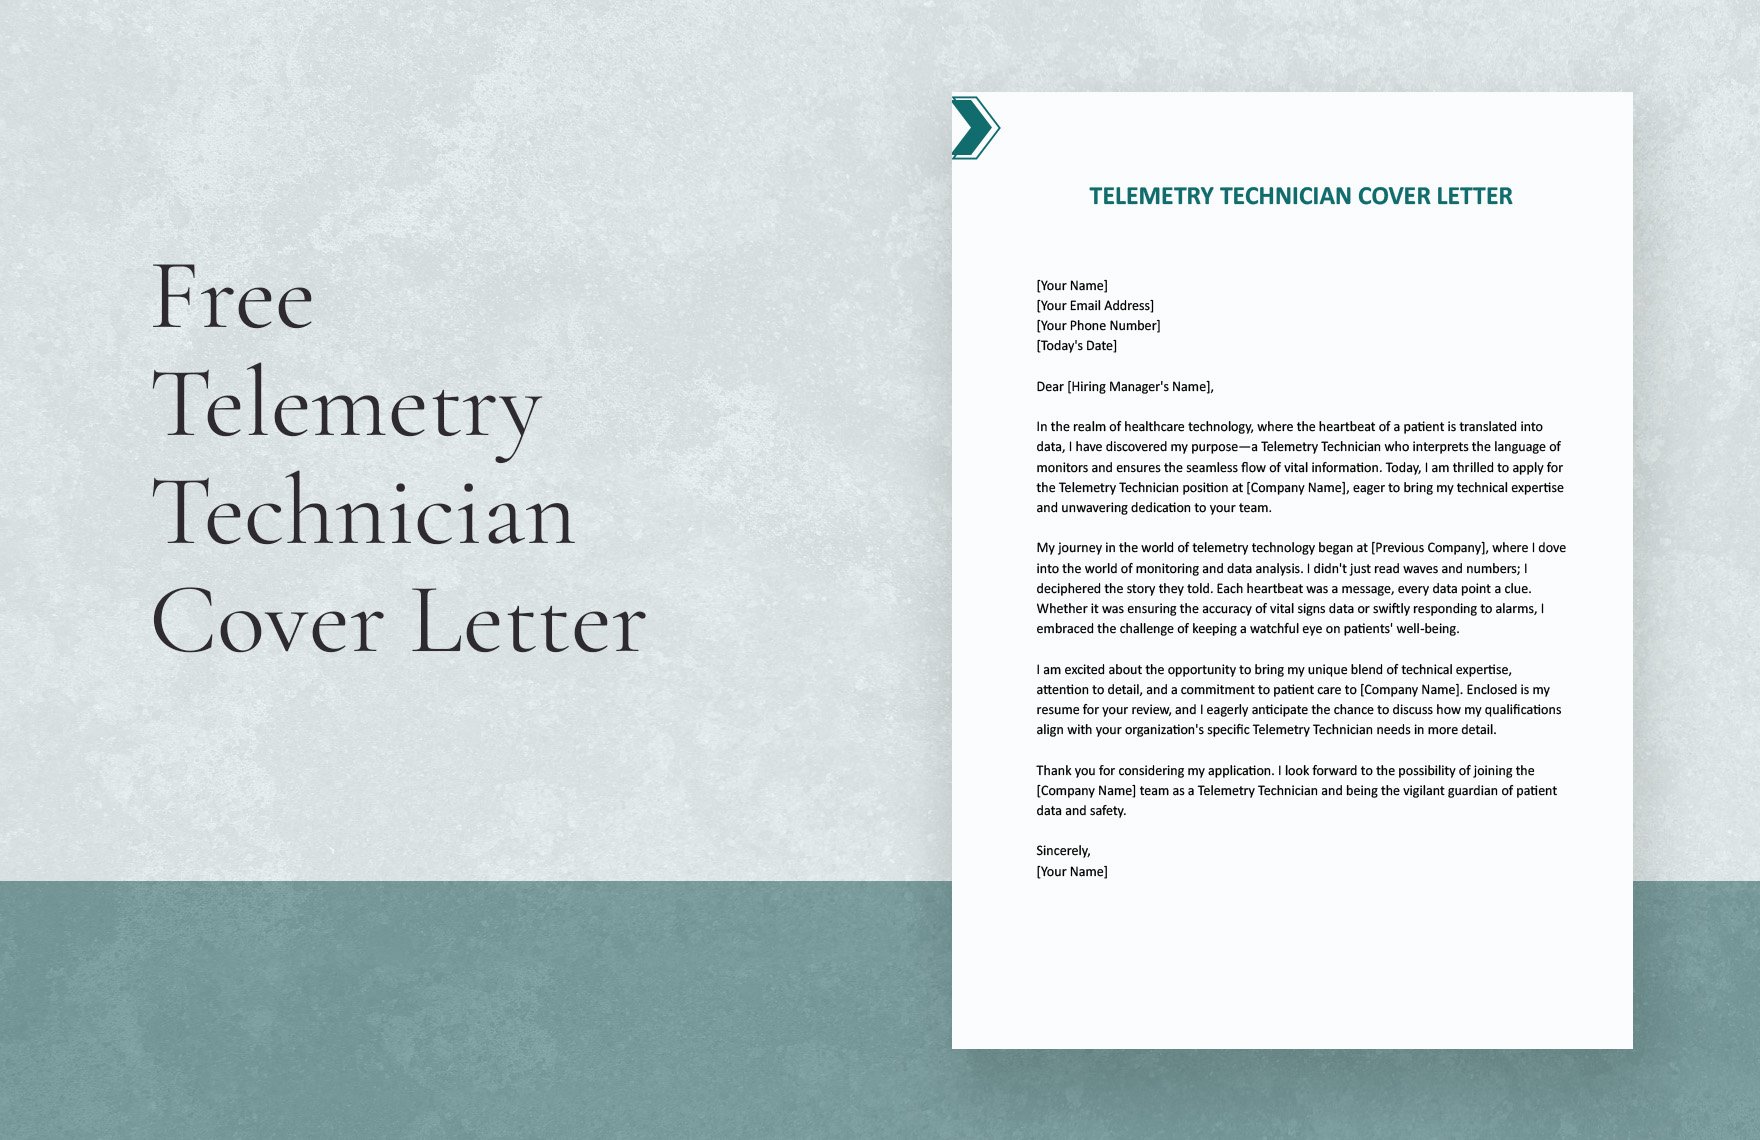 Telemetry Technician Cover Letter in Word, Google Docs